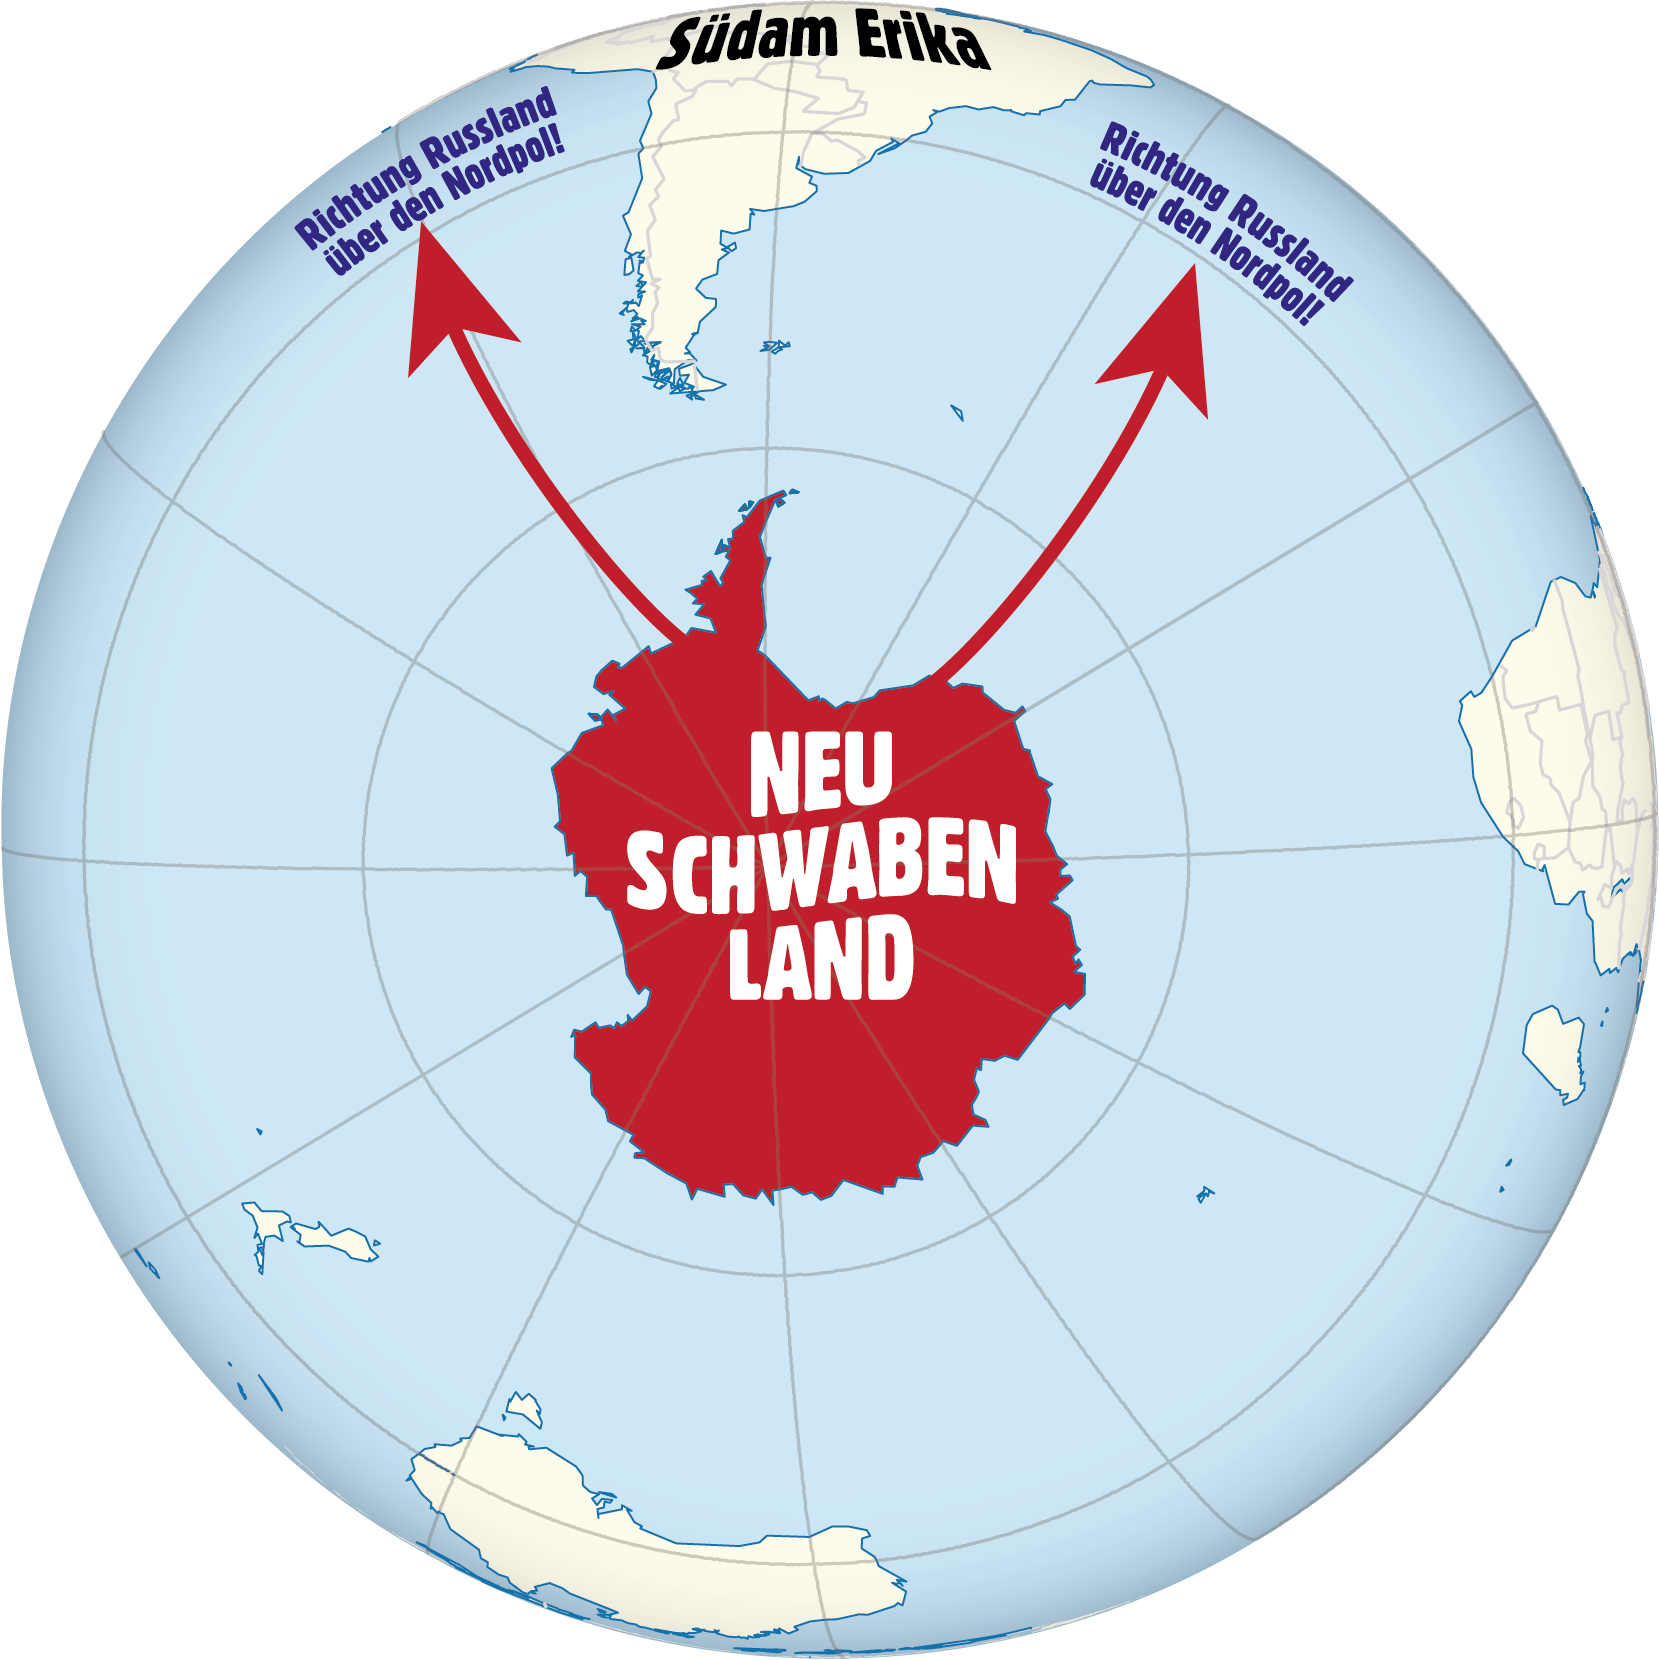 Neuschwabenland_Antarctica_on_the_globe_Nedrohung_fuer_Russland